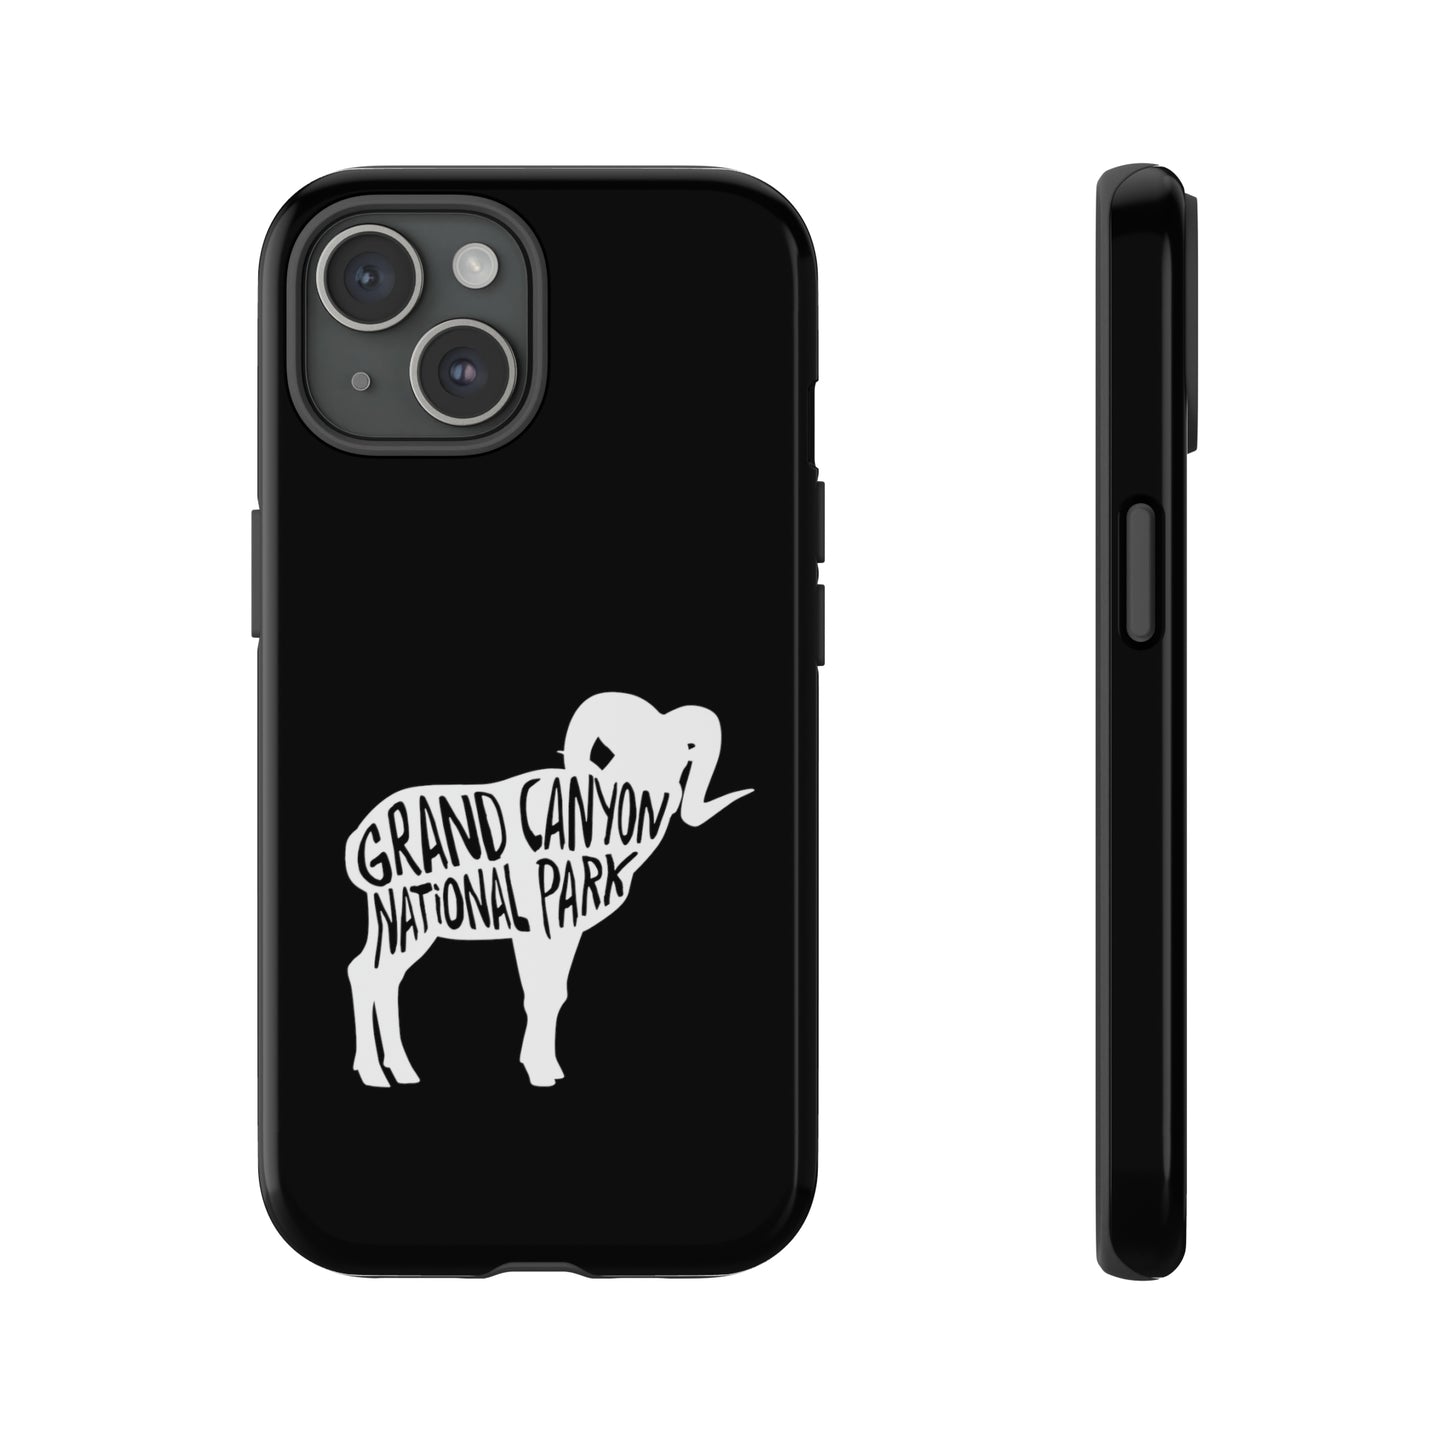 Grand Canyon National Park Phone Case - Bighorn Sheep Design